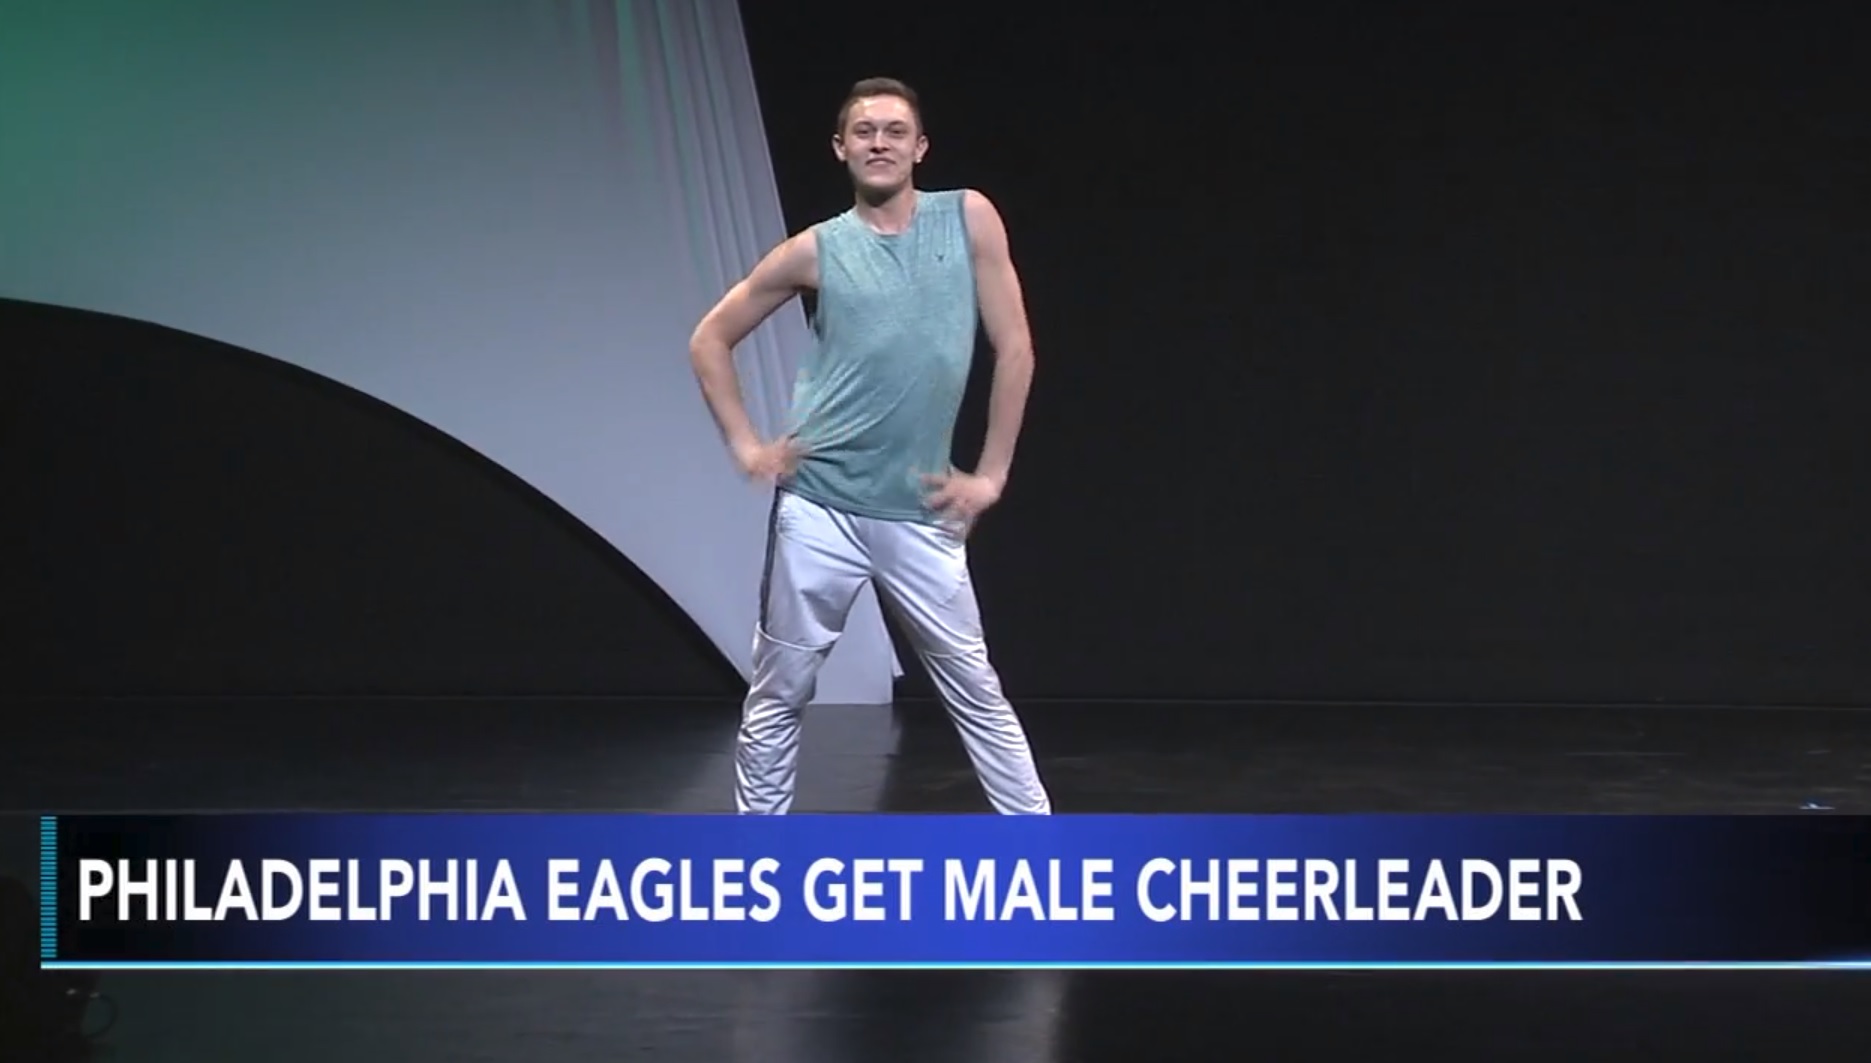 Meet the Philadelphia Eagles’ First Male Cheerleader